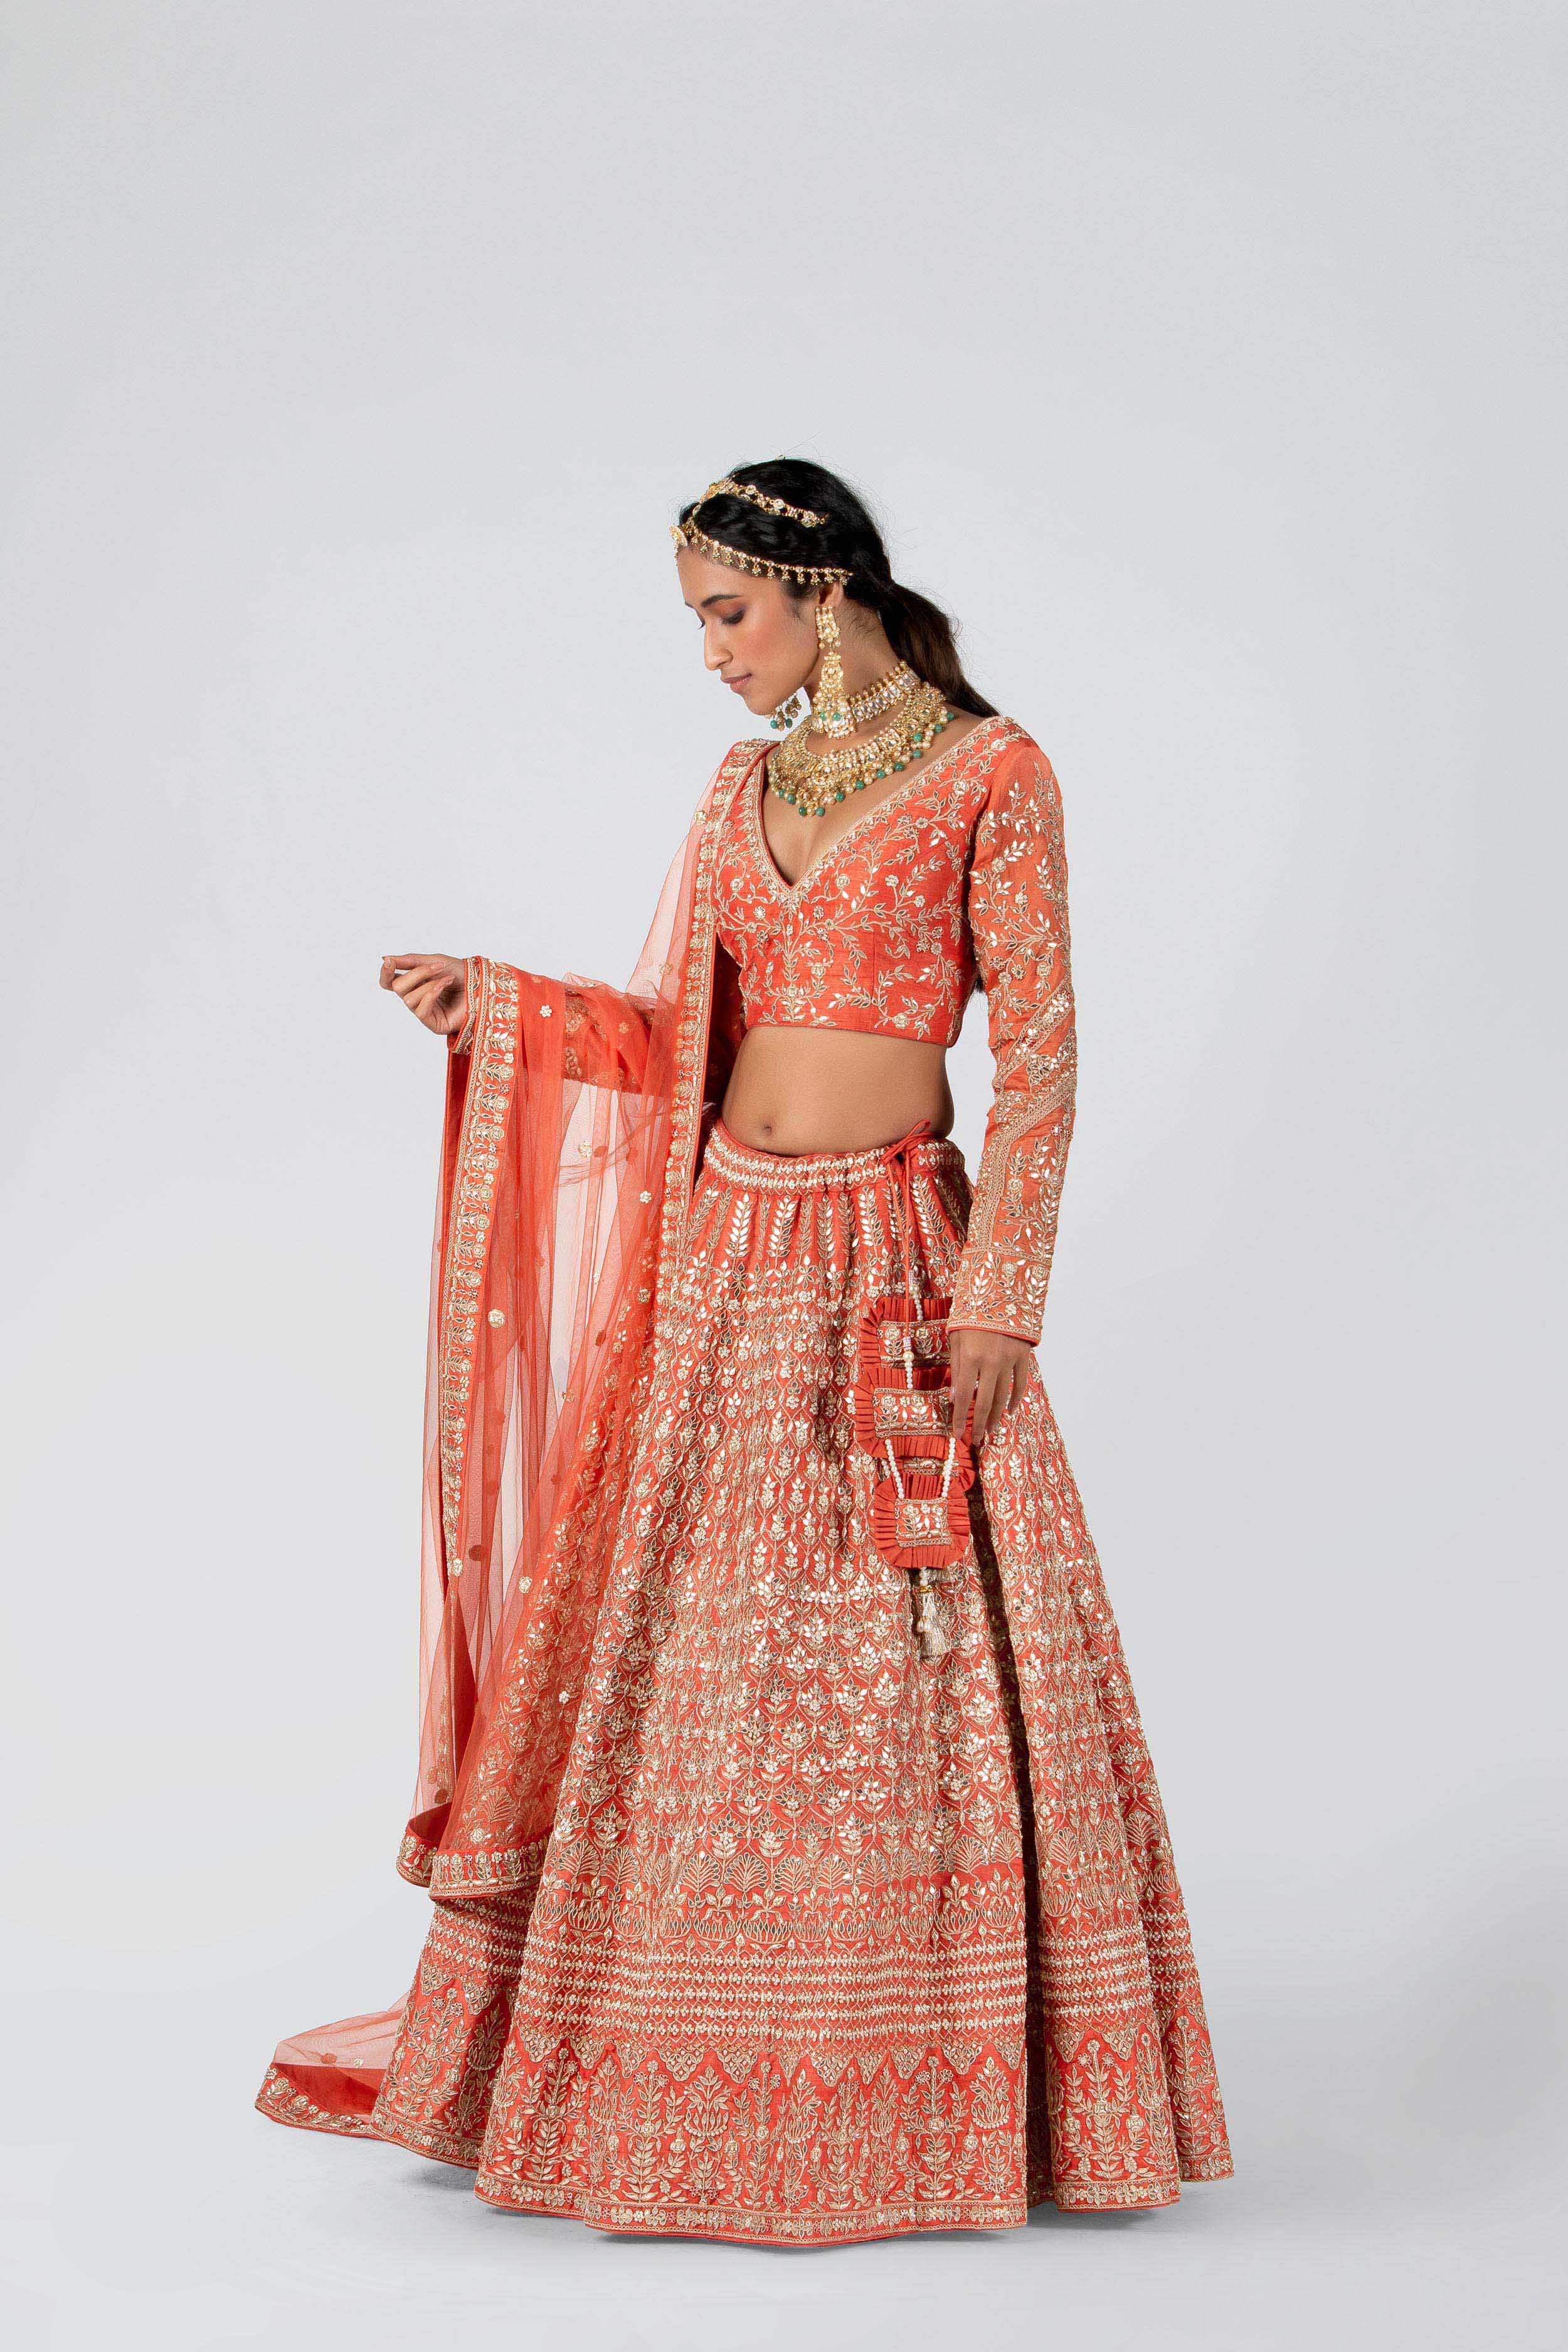 Suruchi Parakh - Rust Orange Floral Embroidered Bridal Lehenga Set